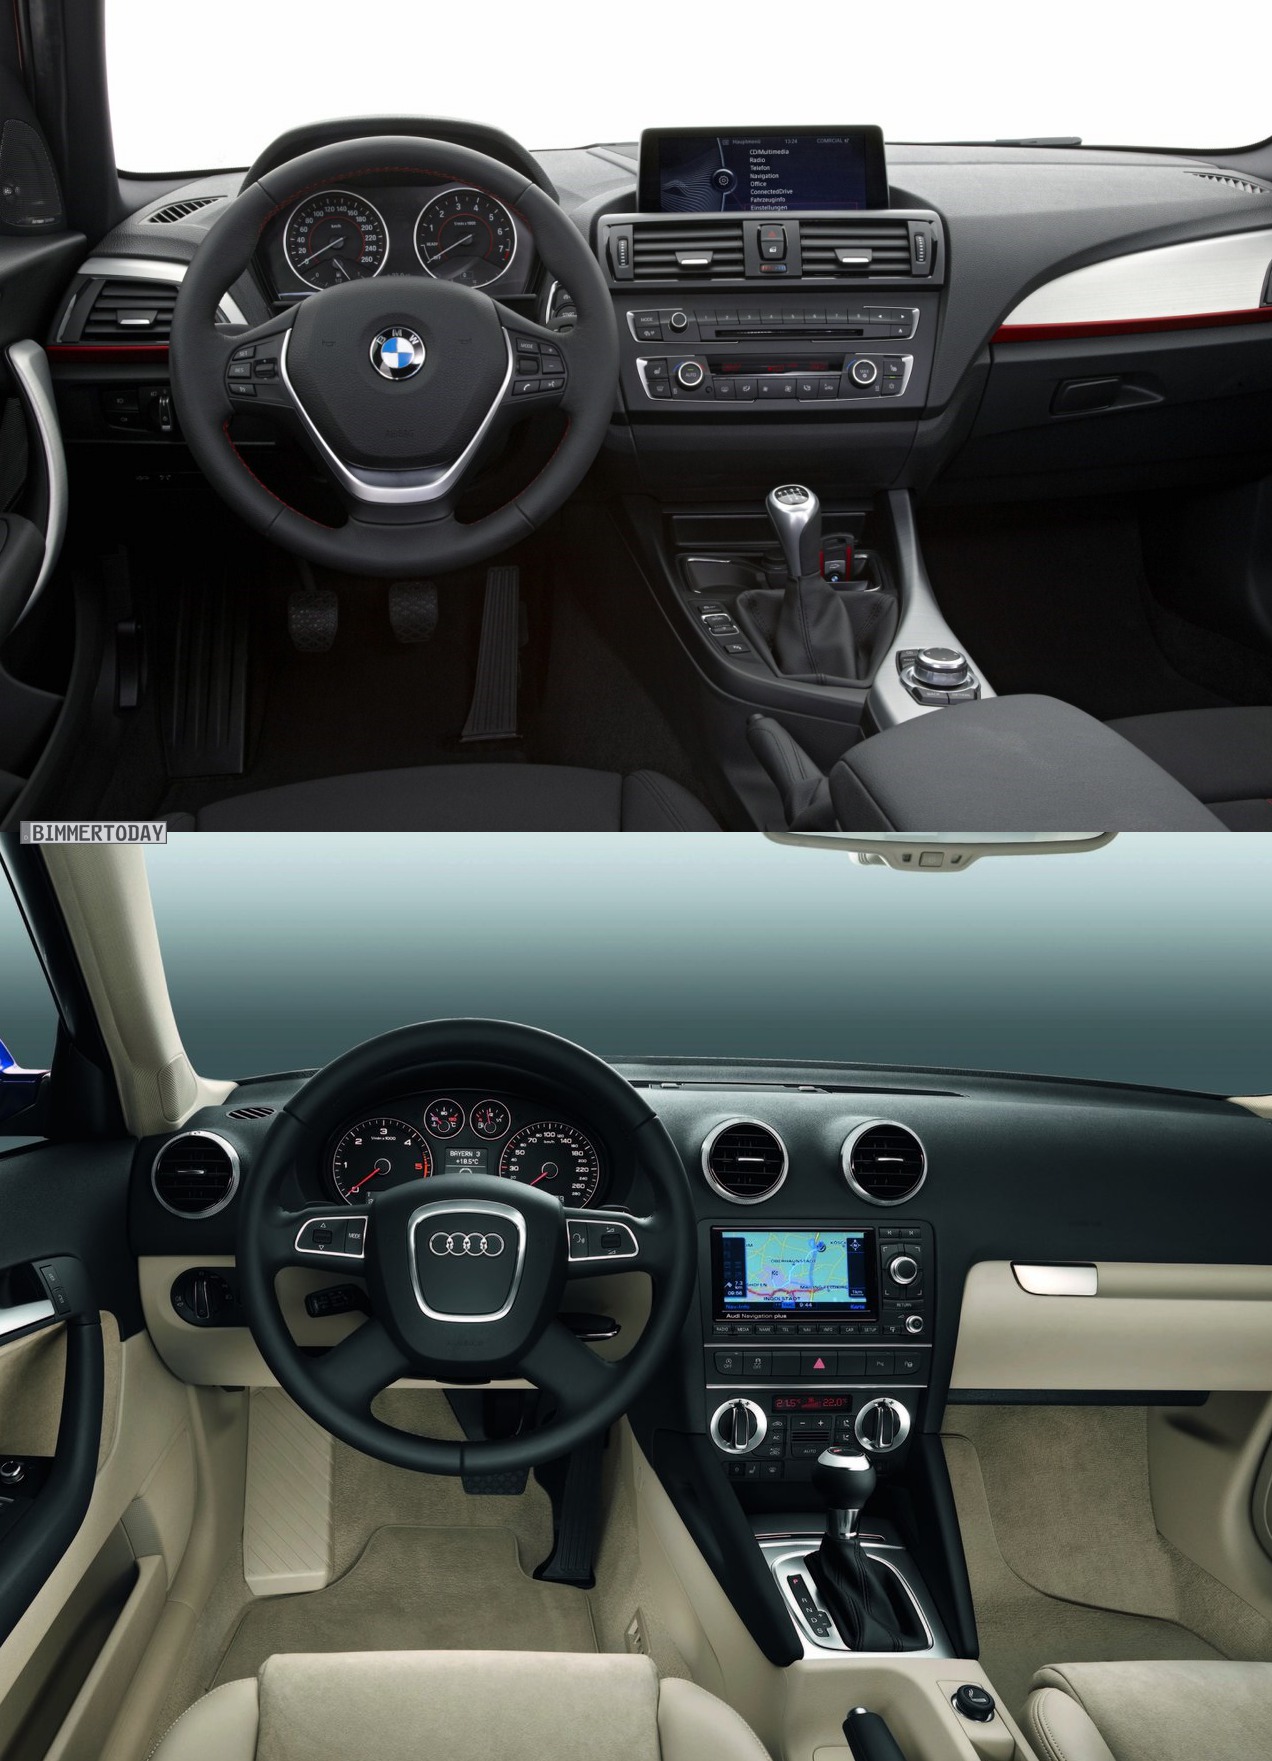 Bildvergleich BMW 1er F20 Audi A3 Sportback Interieur